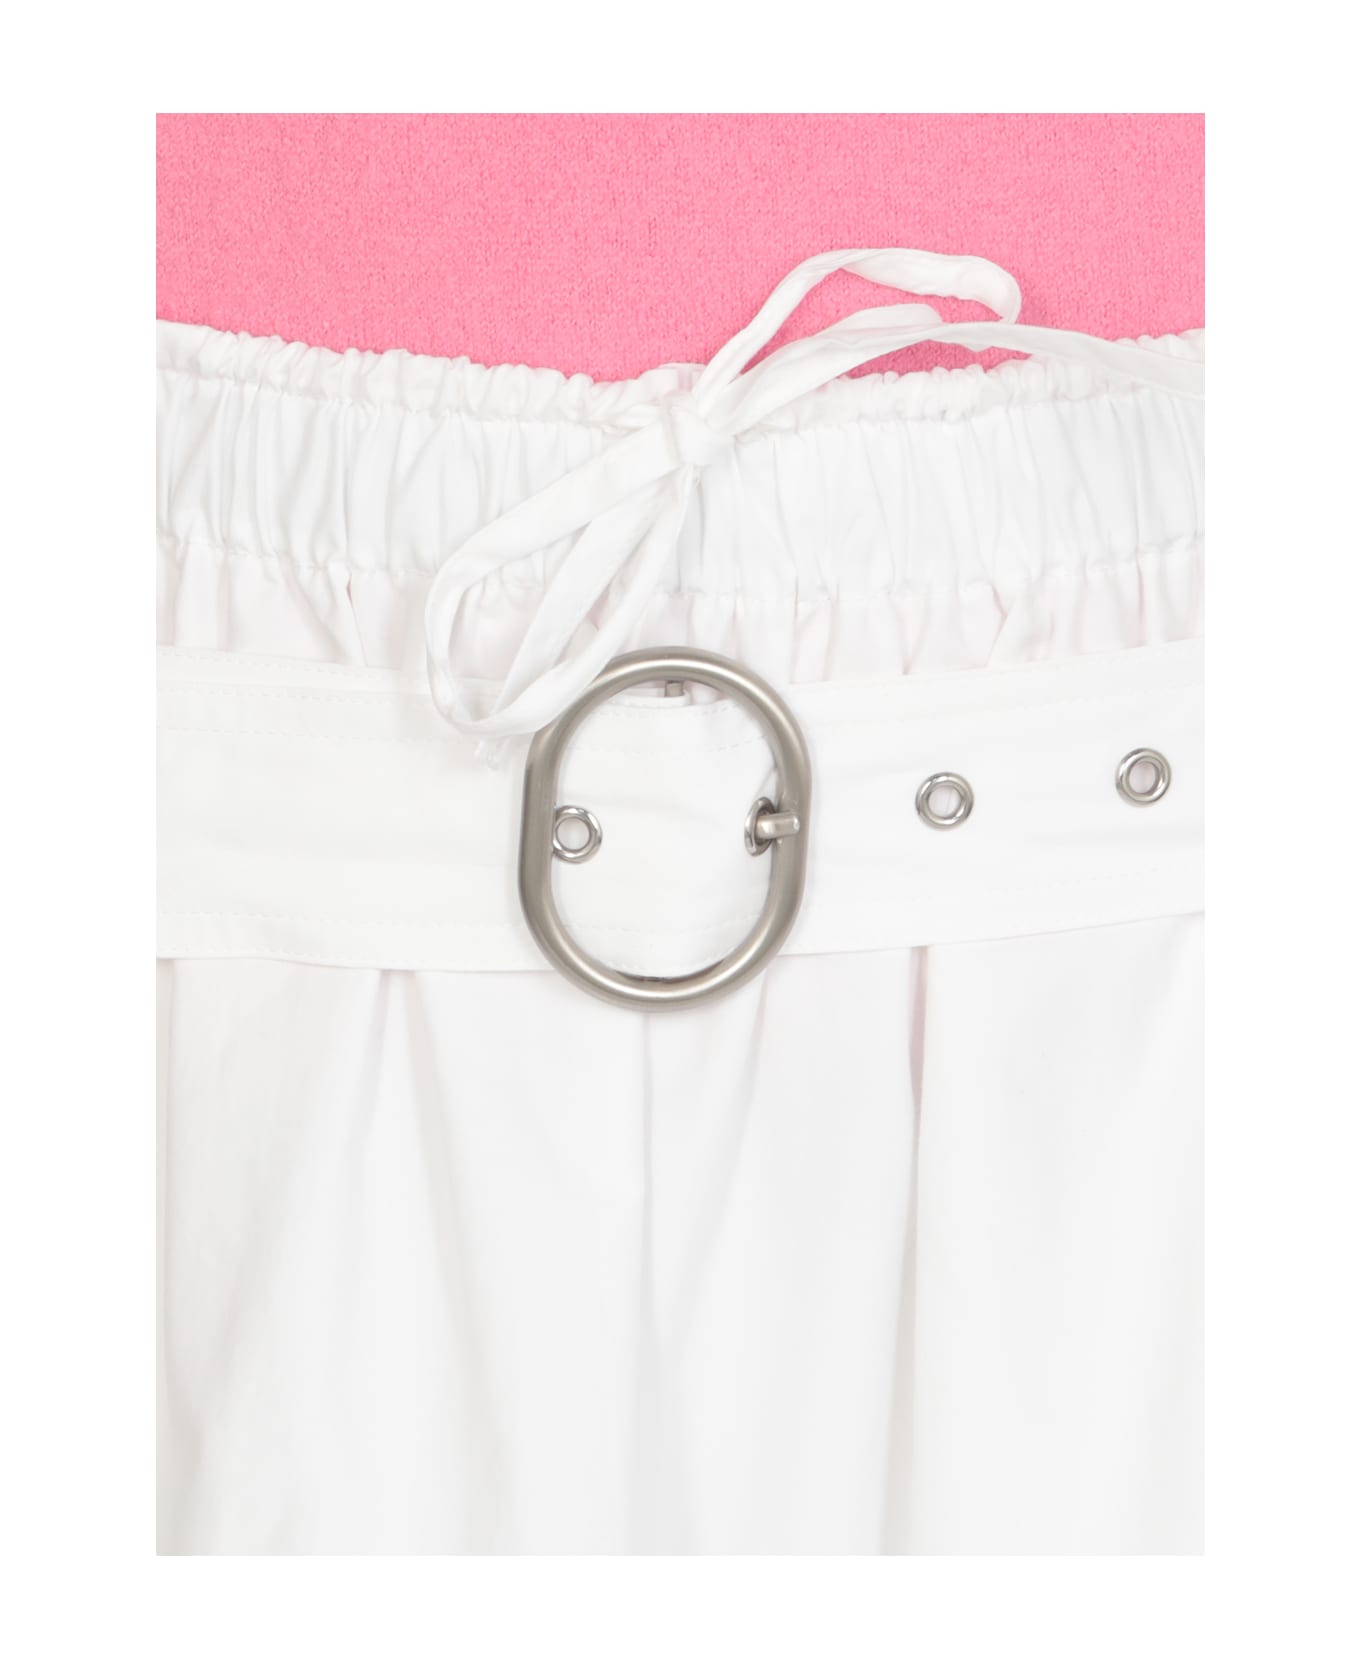 Jil Sander Long Pleated Skirt - Bianco スカート